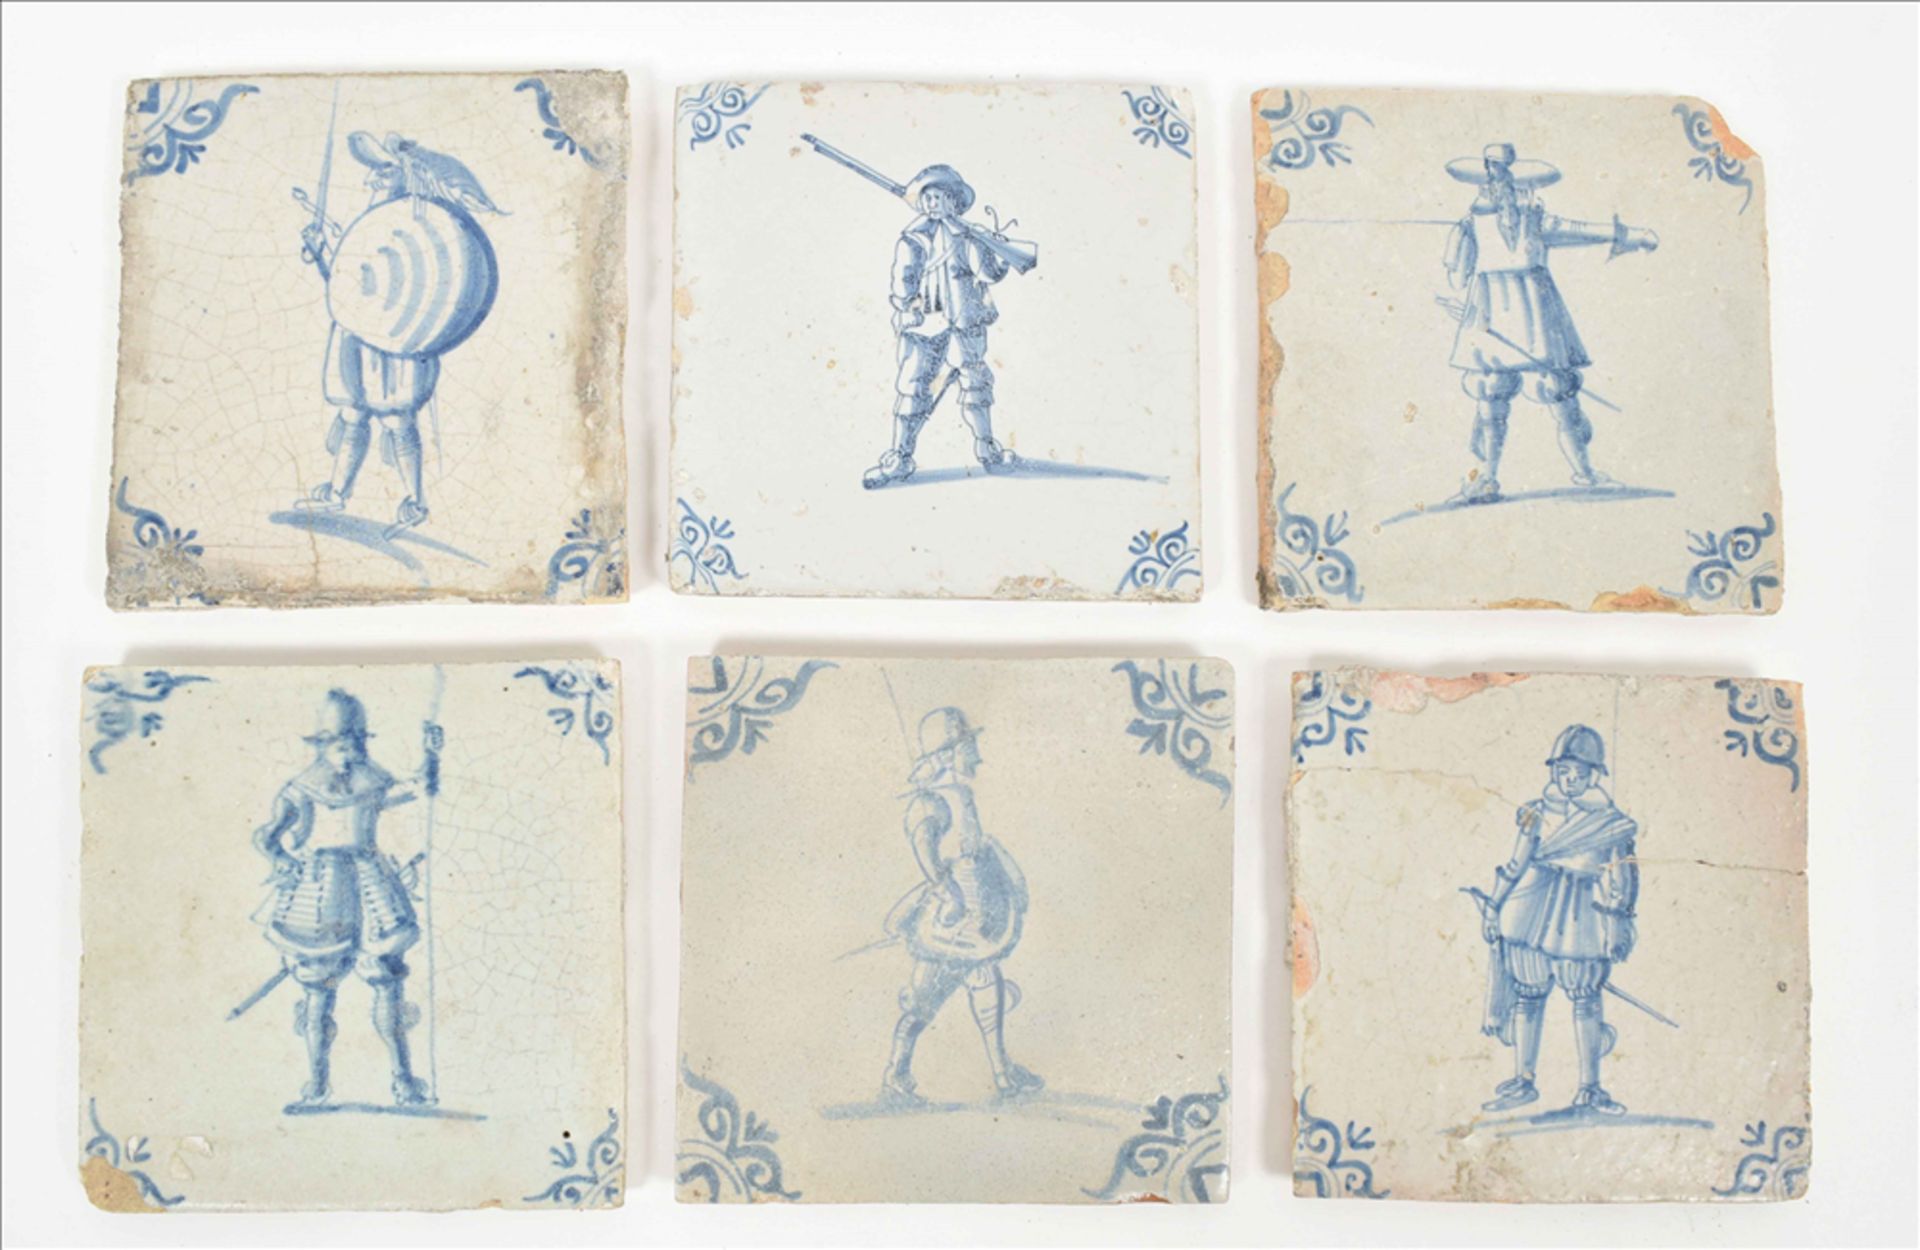 [Militaria] Twelve Dutch soldier tiles - Image 2 of 5